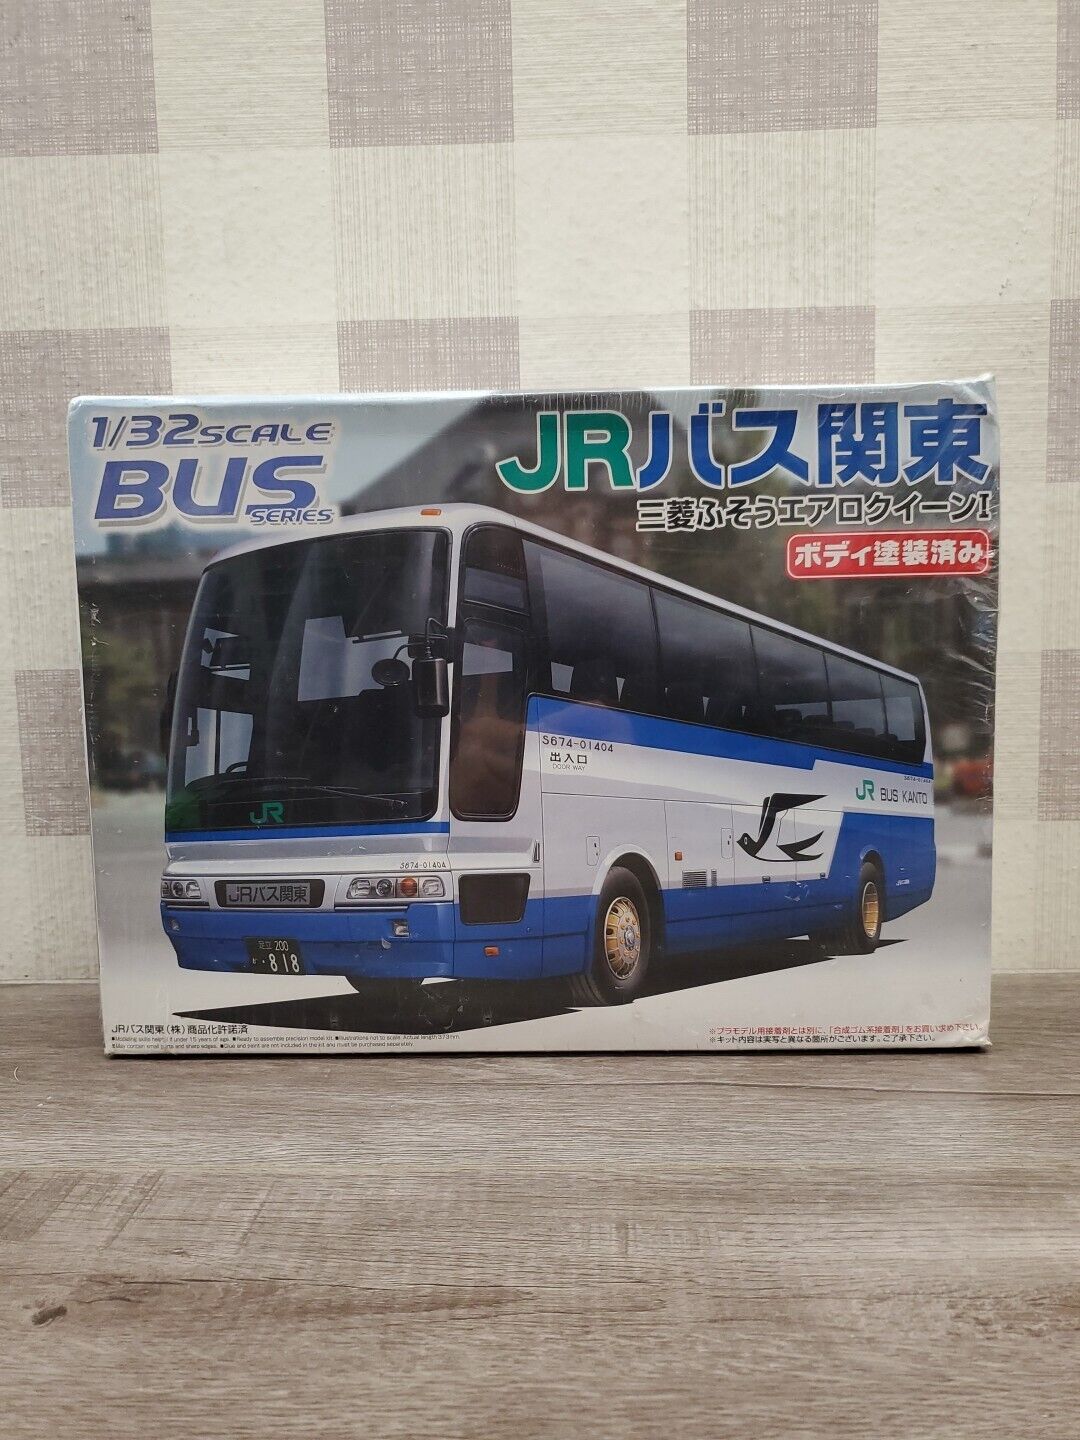 Aoshima 1/32 Scale Bus Series JR Bus Kanto - New ✅